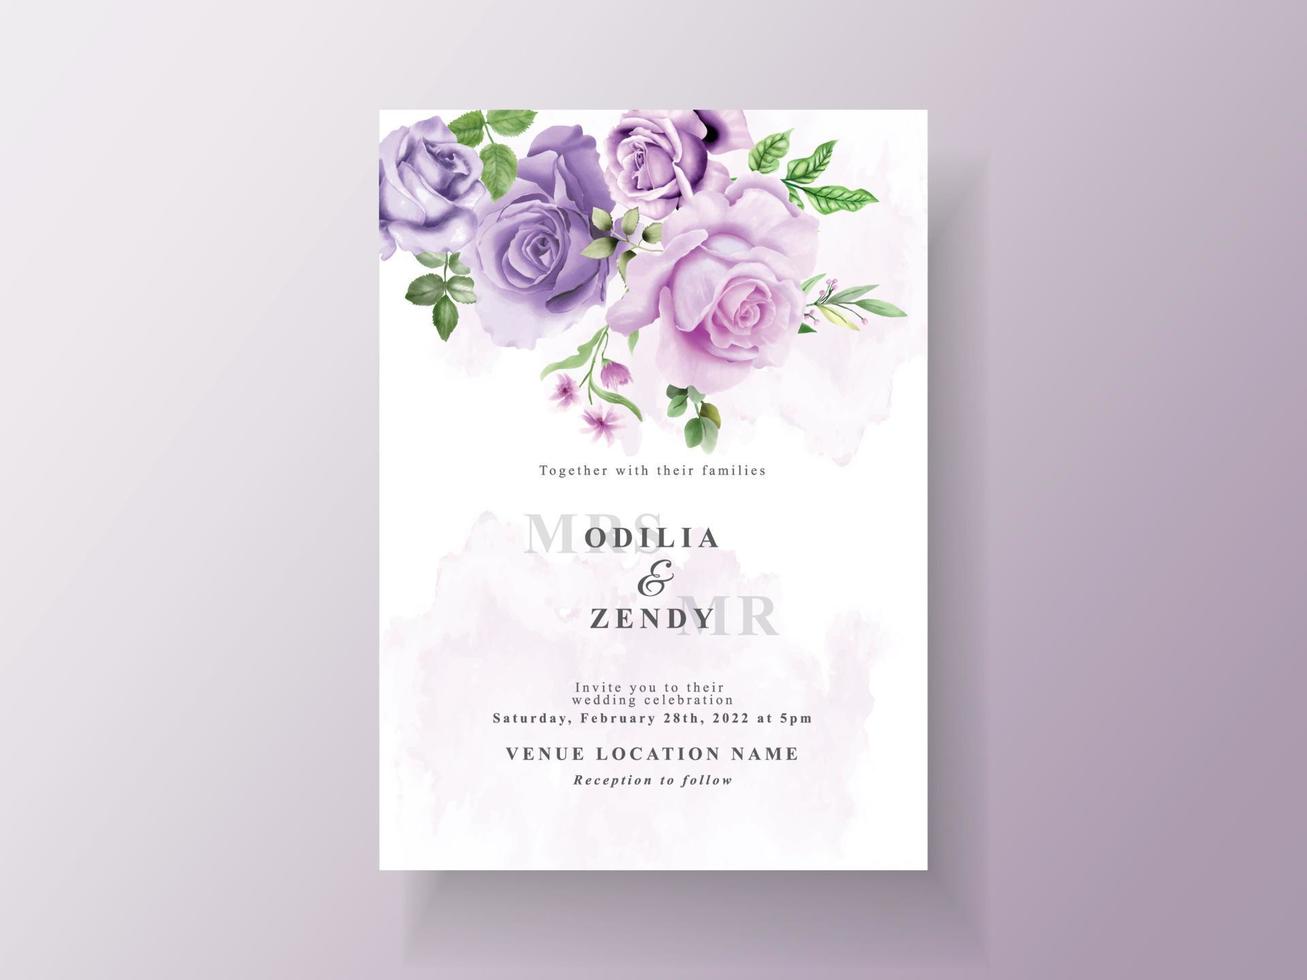 Beautiful purple flowers wedding invitation template vector